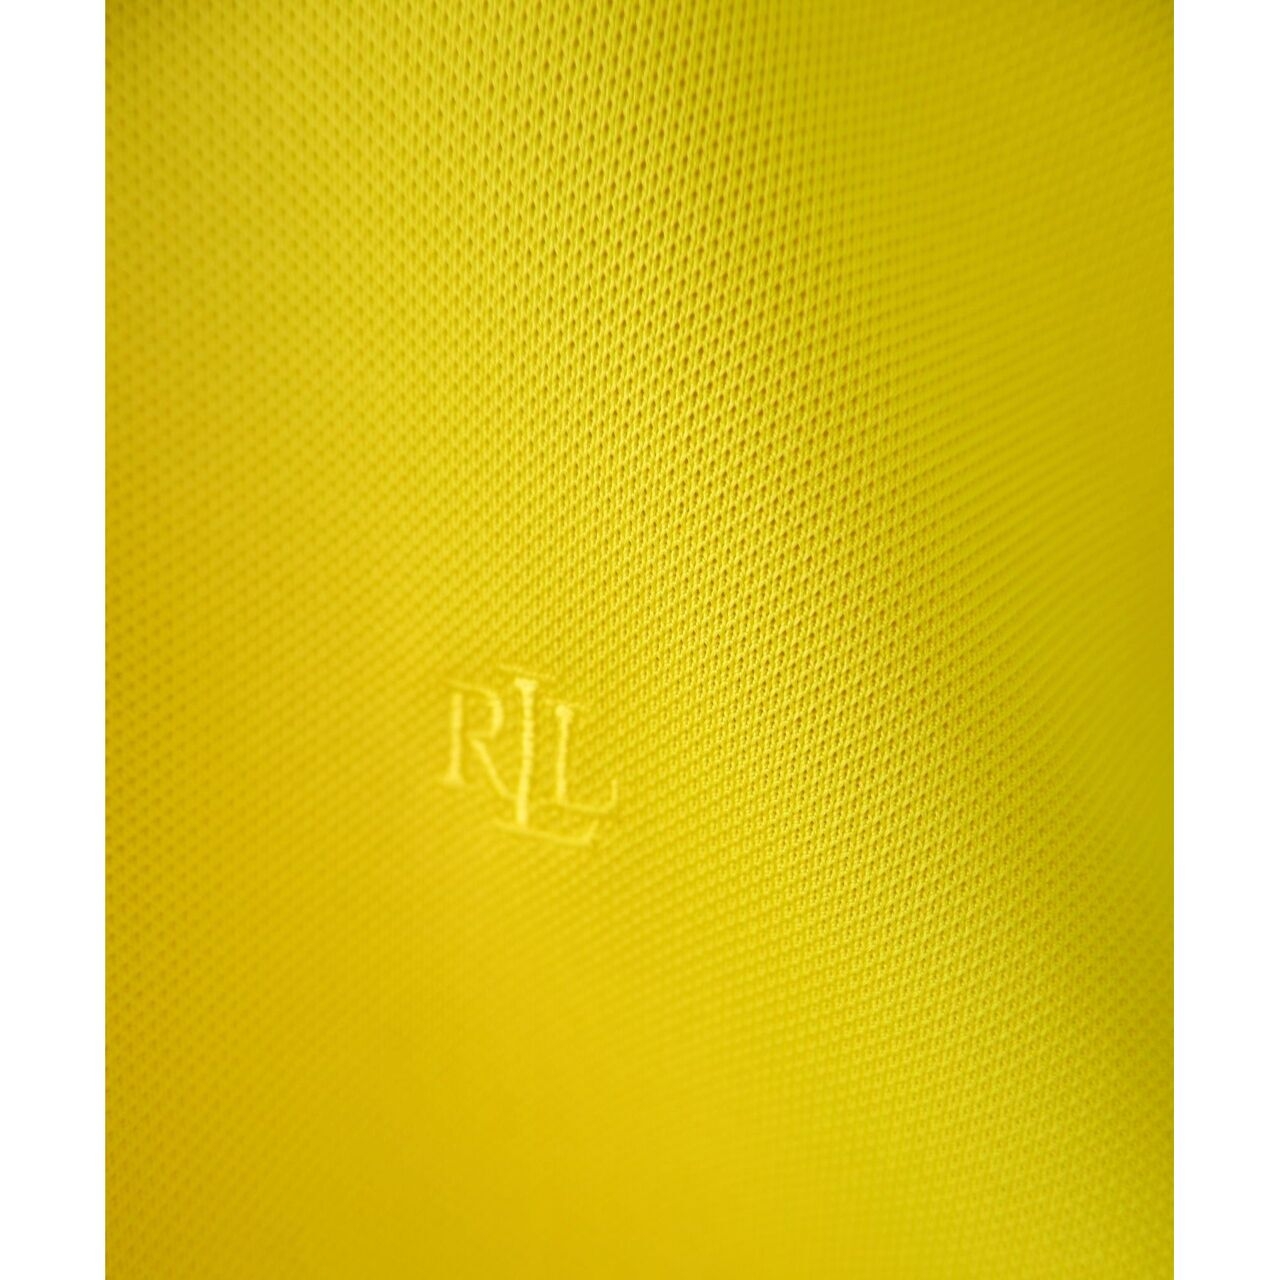 Ralph Lauren Light Yellow Organic Kaos